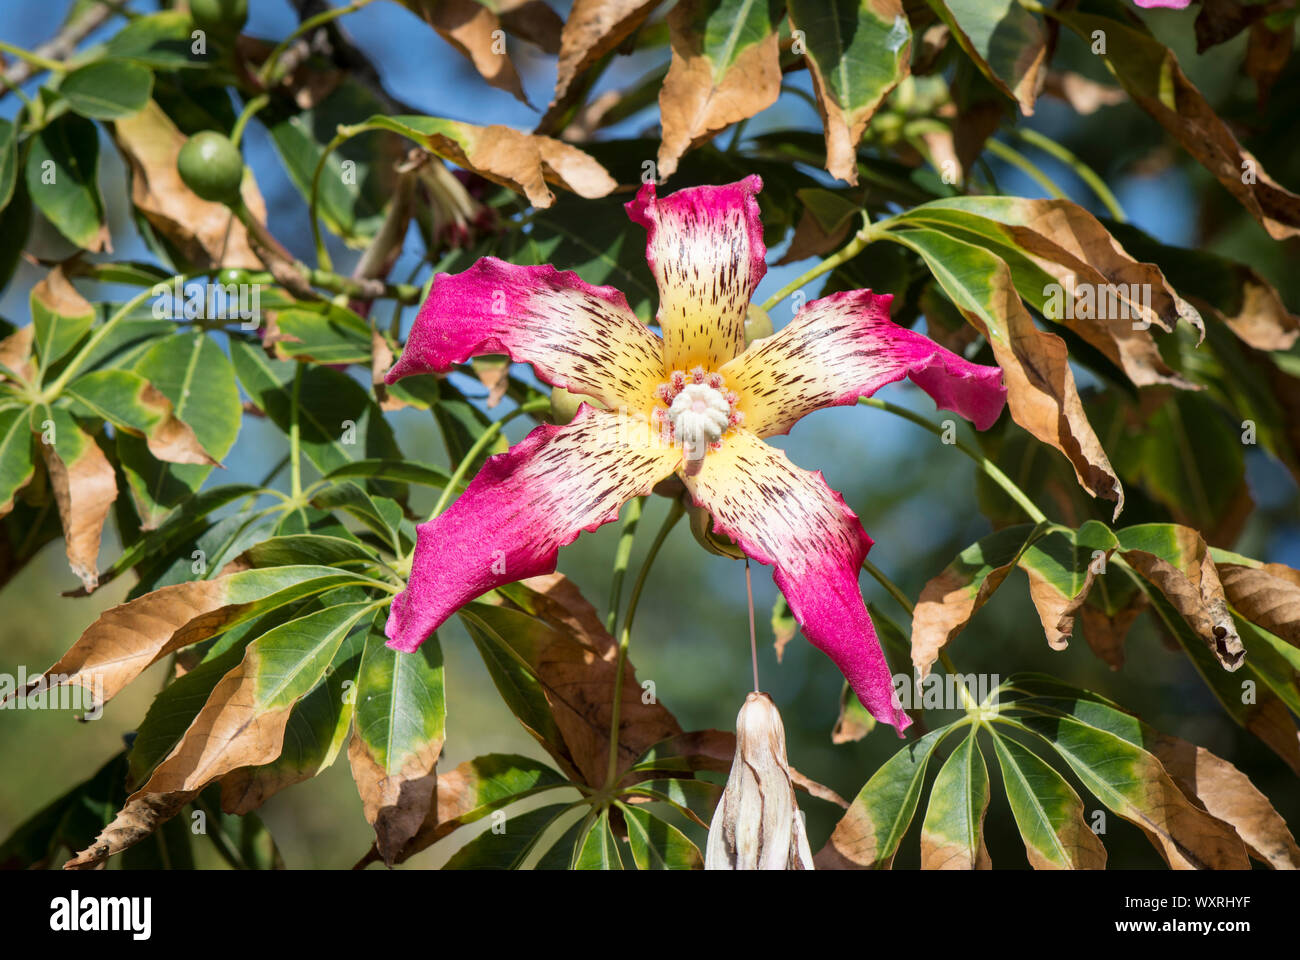 Fiore di seta floss tree (Ceiba speciosa). Spagna. Foto Stock